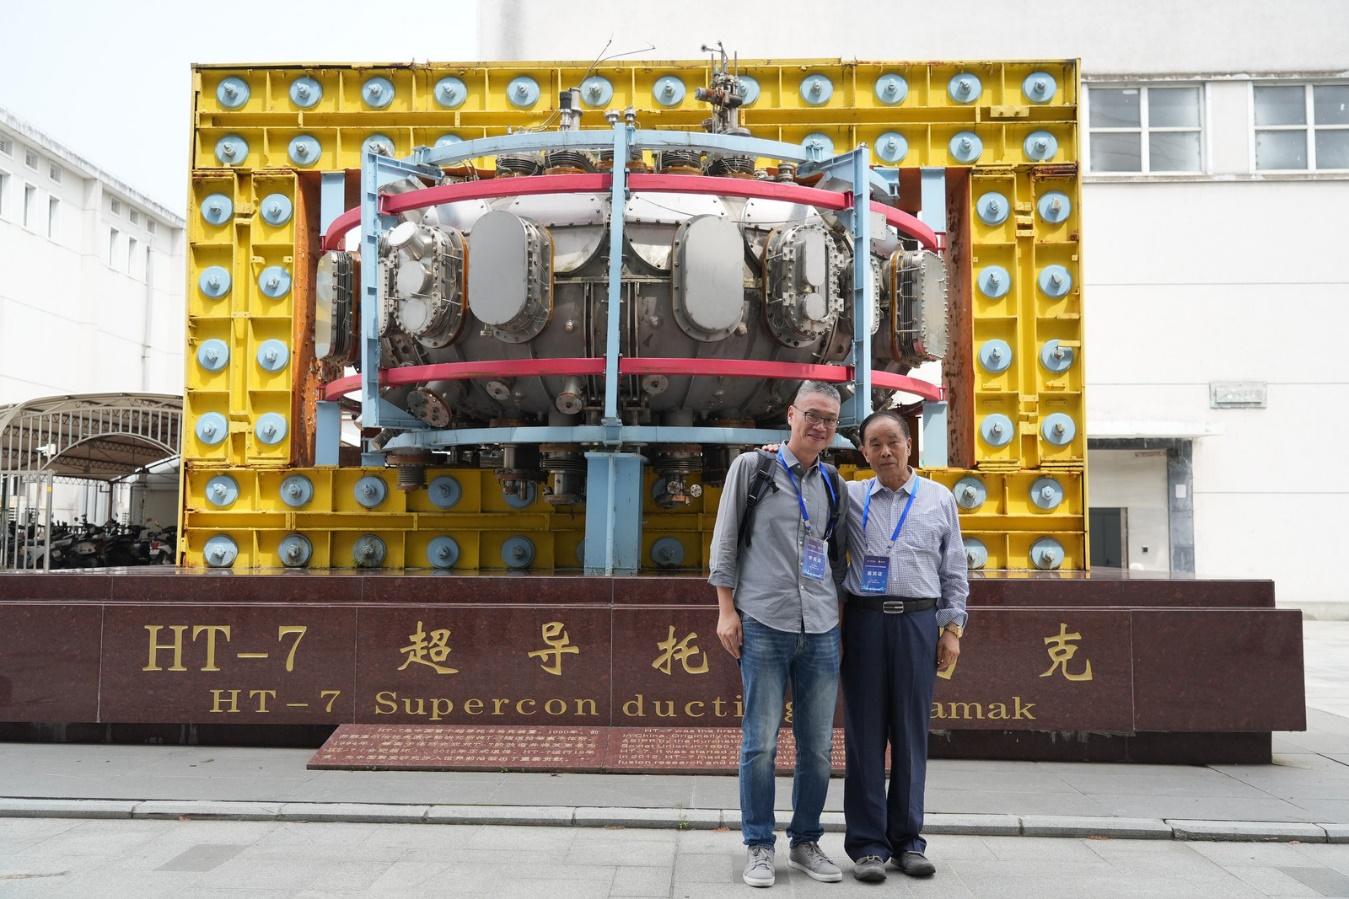 China's first superconducting tokamak device HT-7